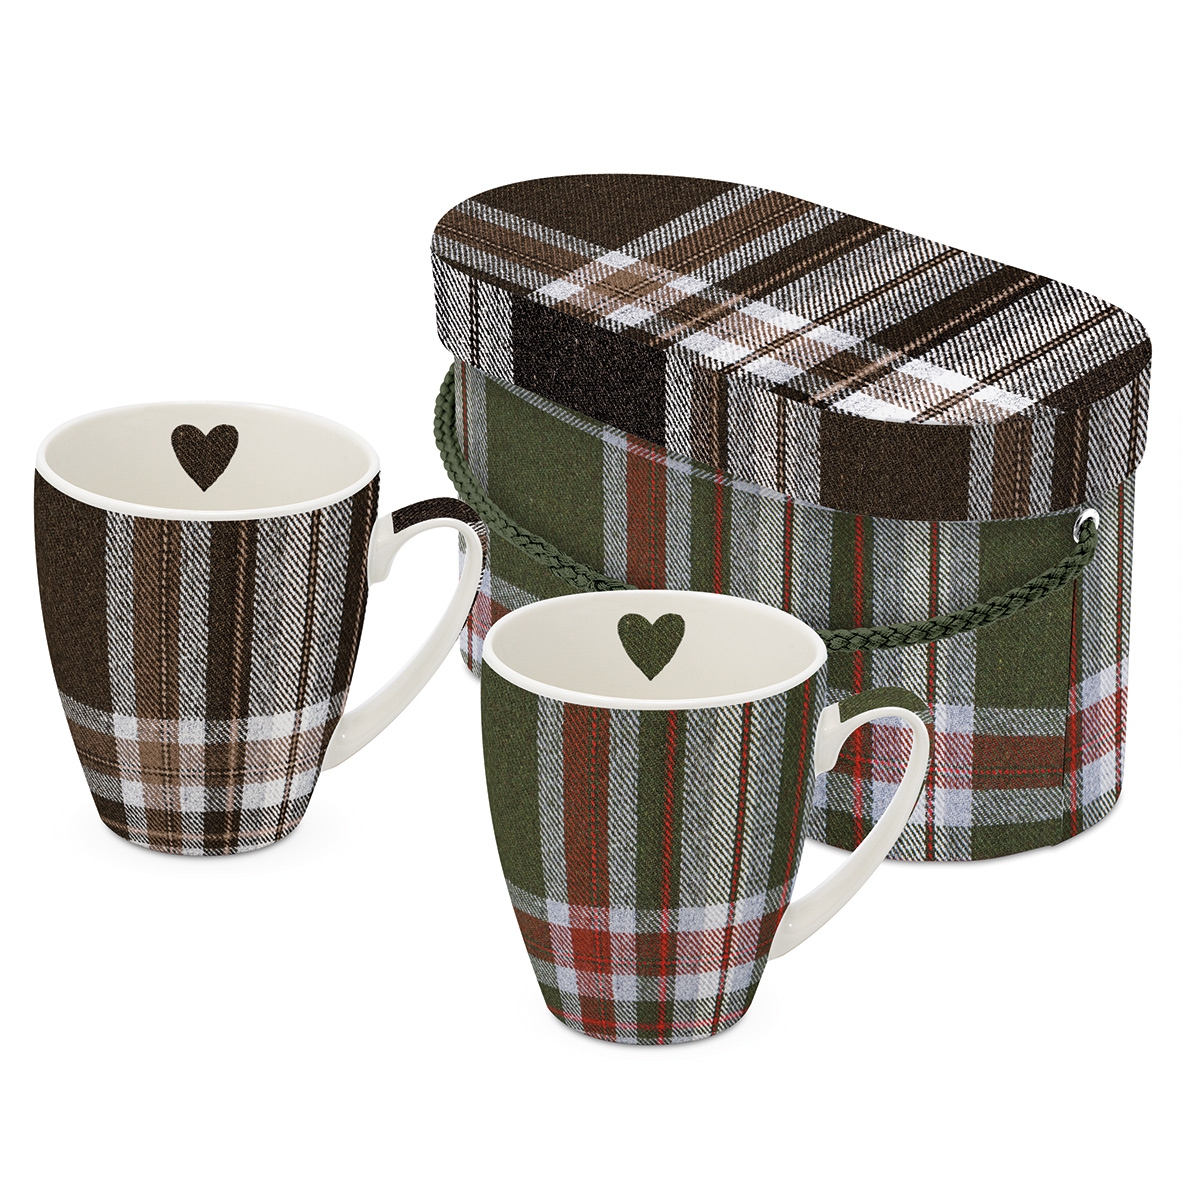 Porcelain cup with handle - Check Green & Brown 2 Mug Set